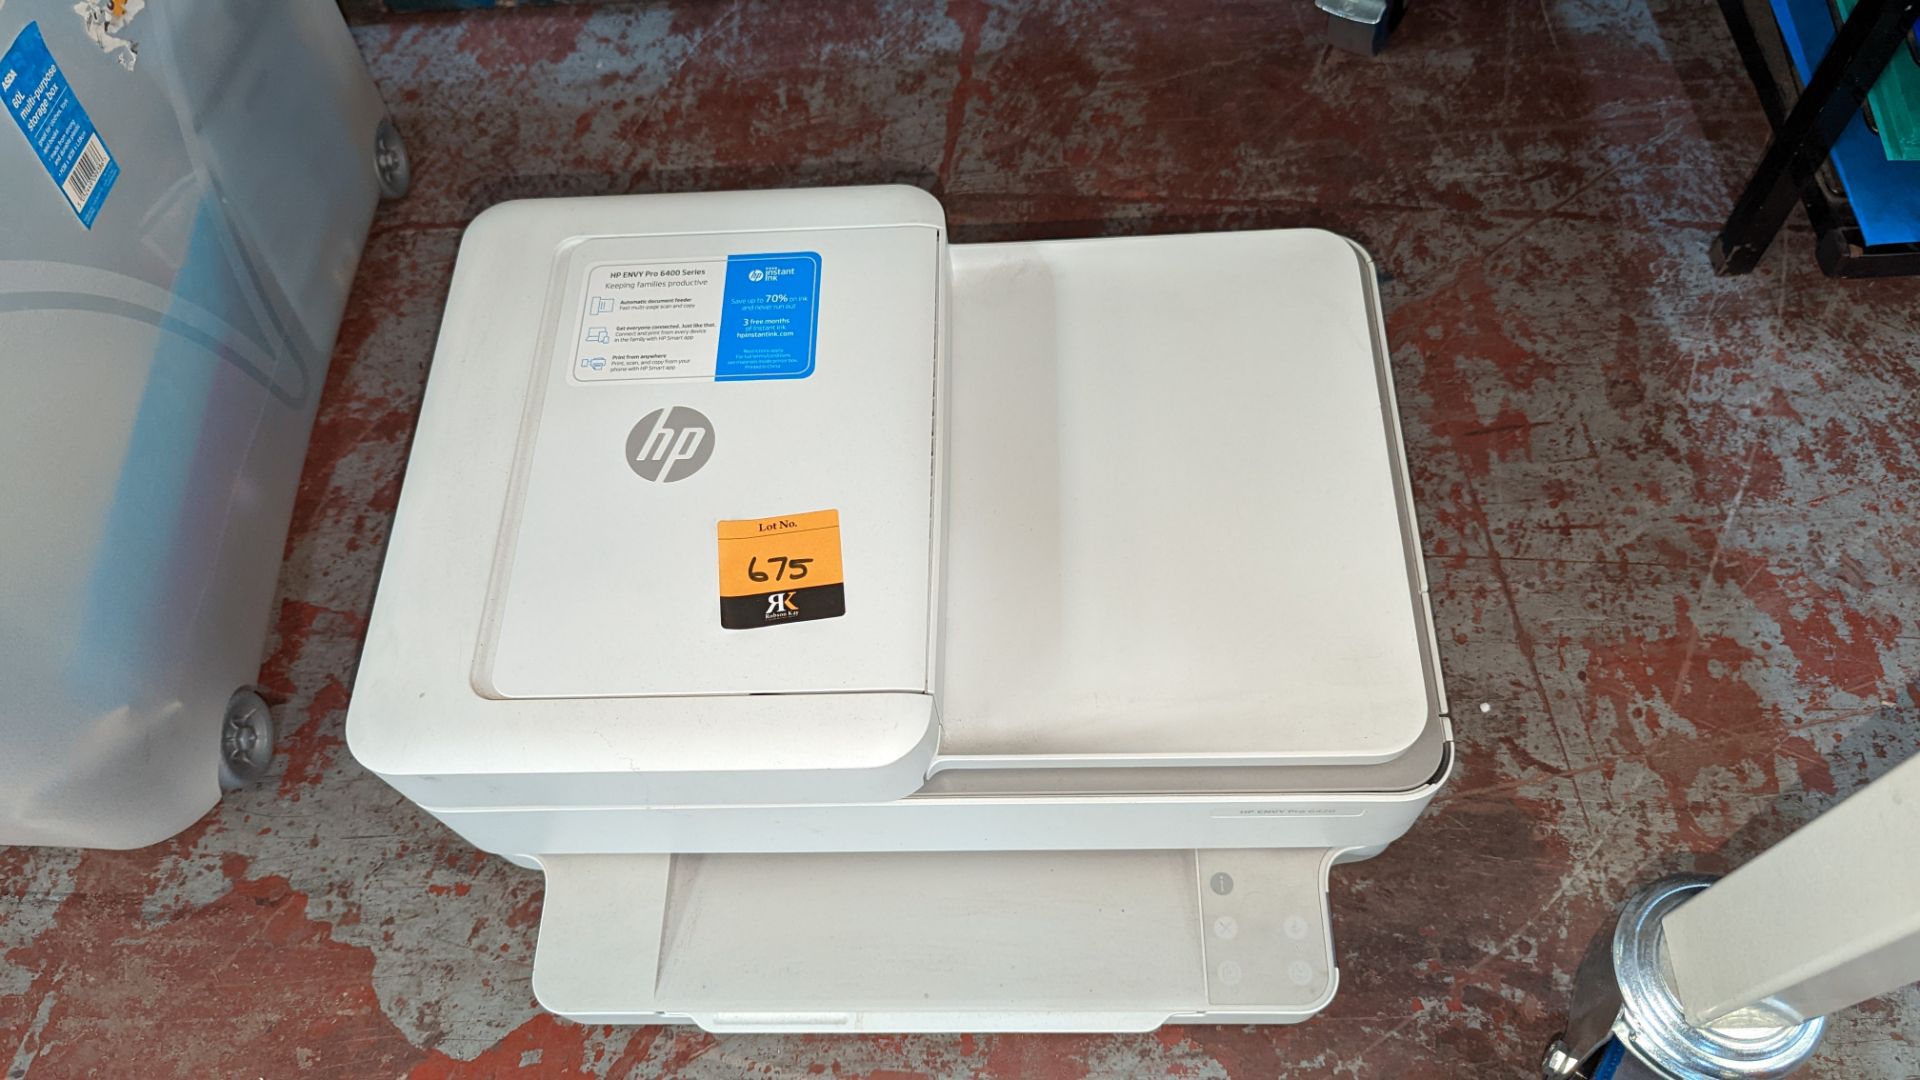 HP Envy Pro 6420 printer/copier - Image 4 of 5